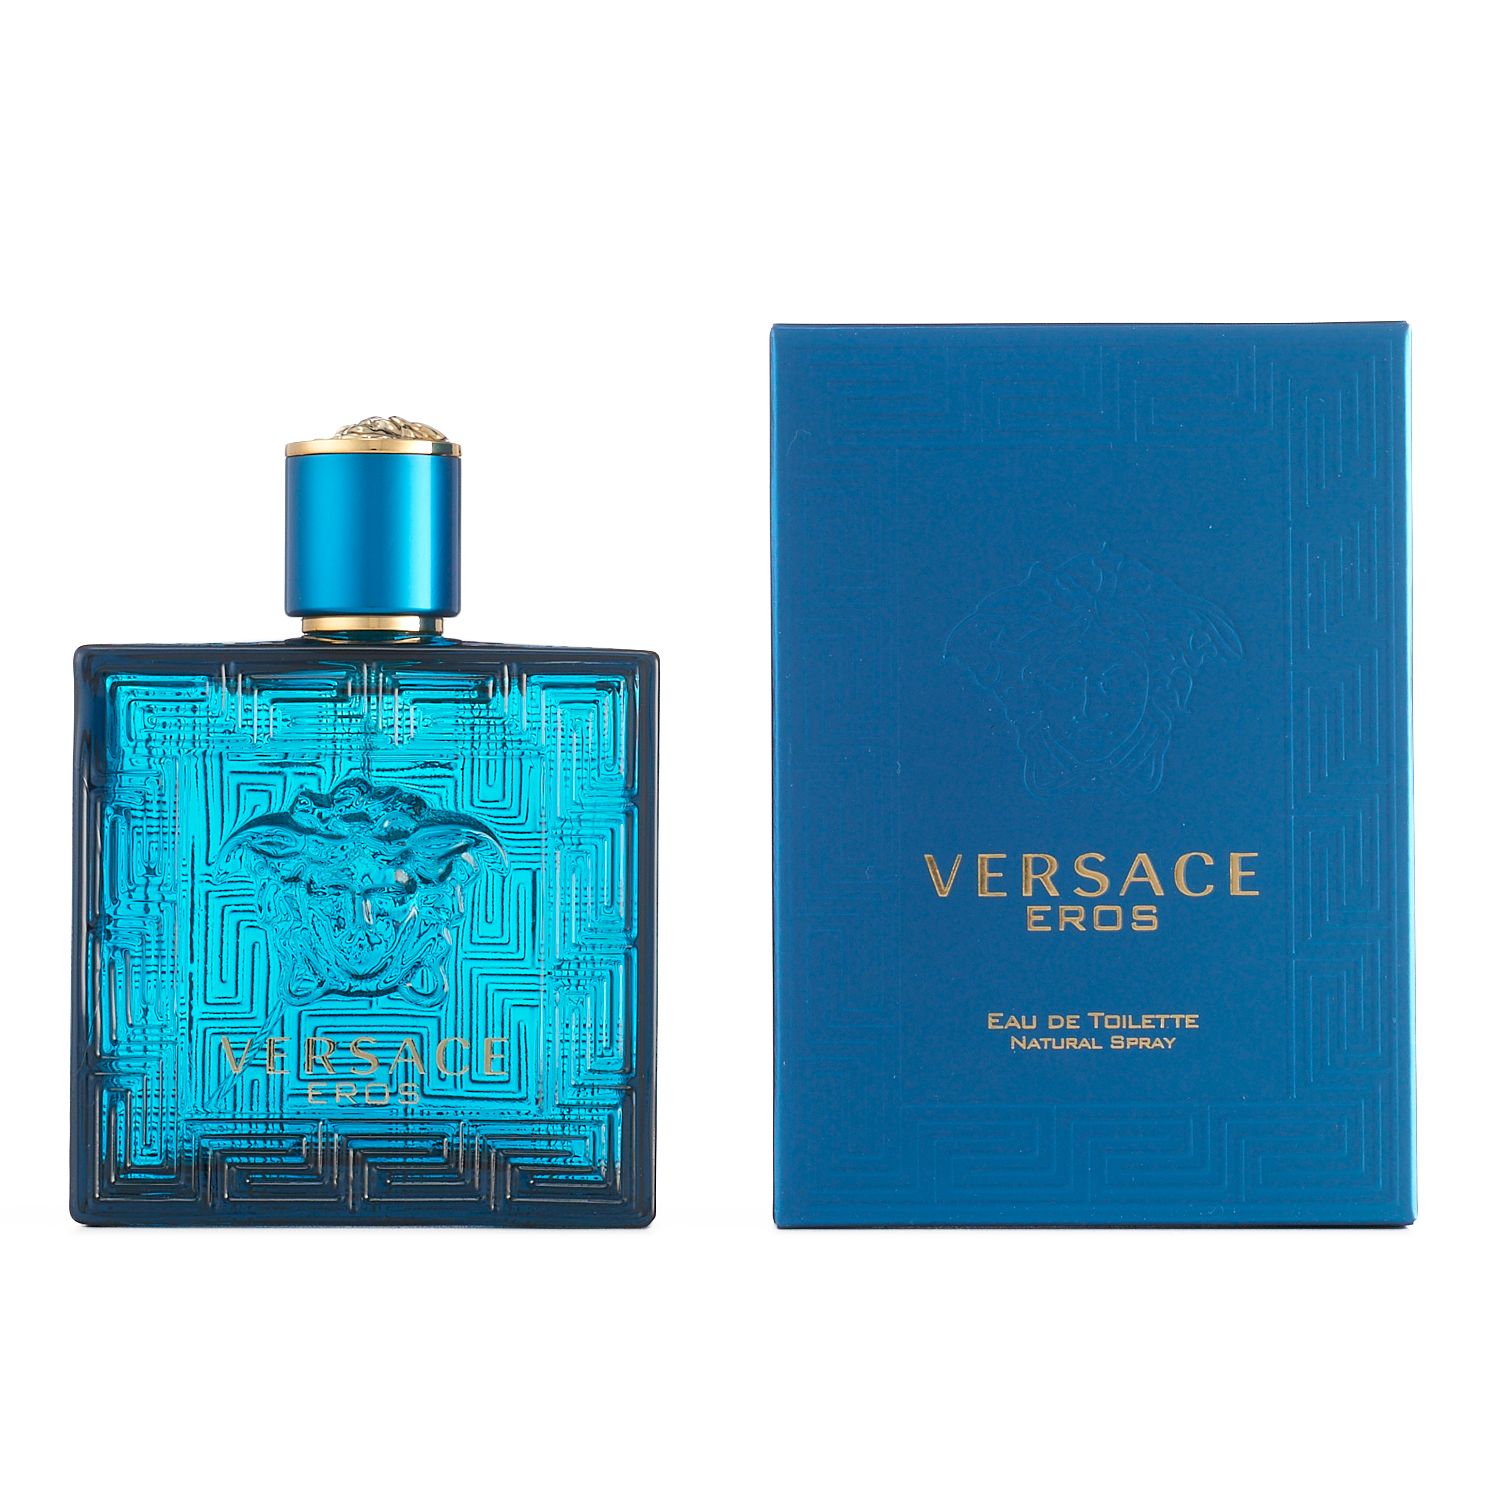 kohls light blue perfume